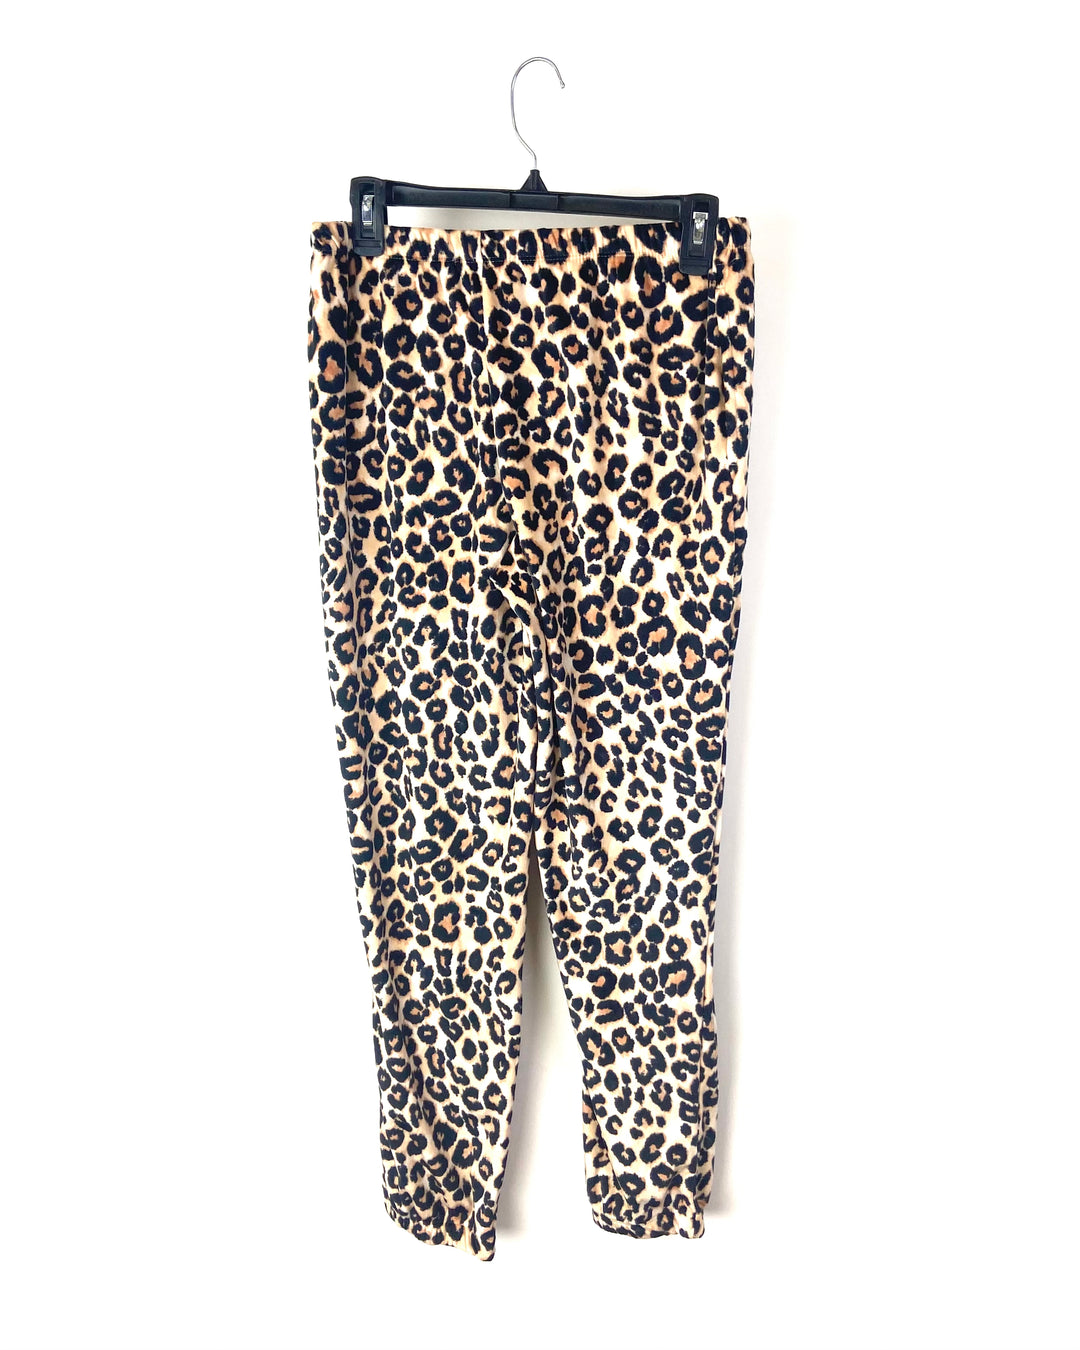 Leopard Print Pajama Pants - Small